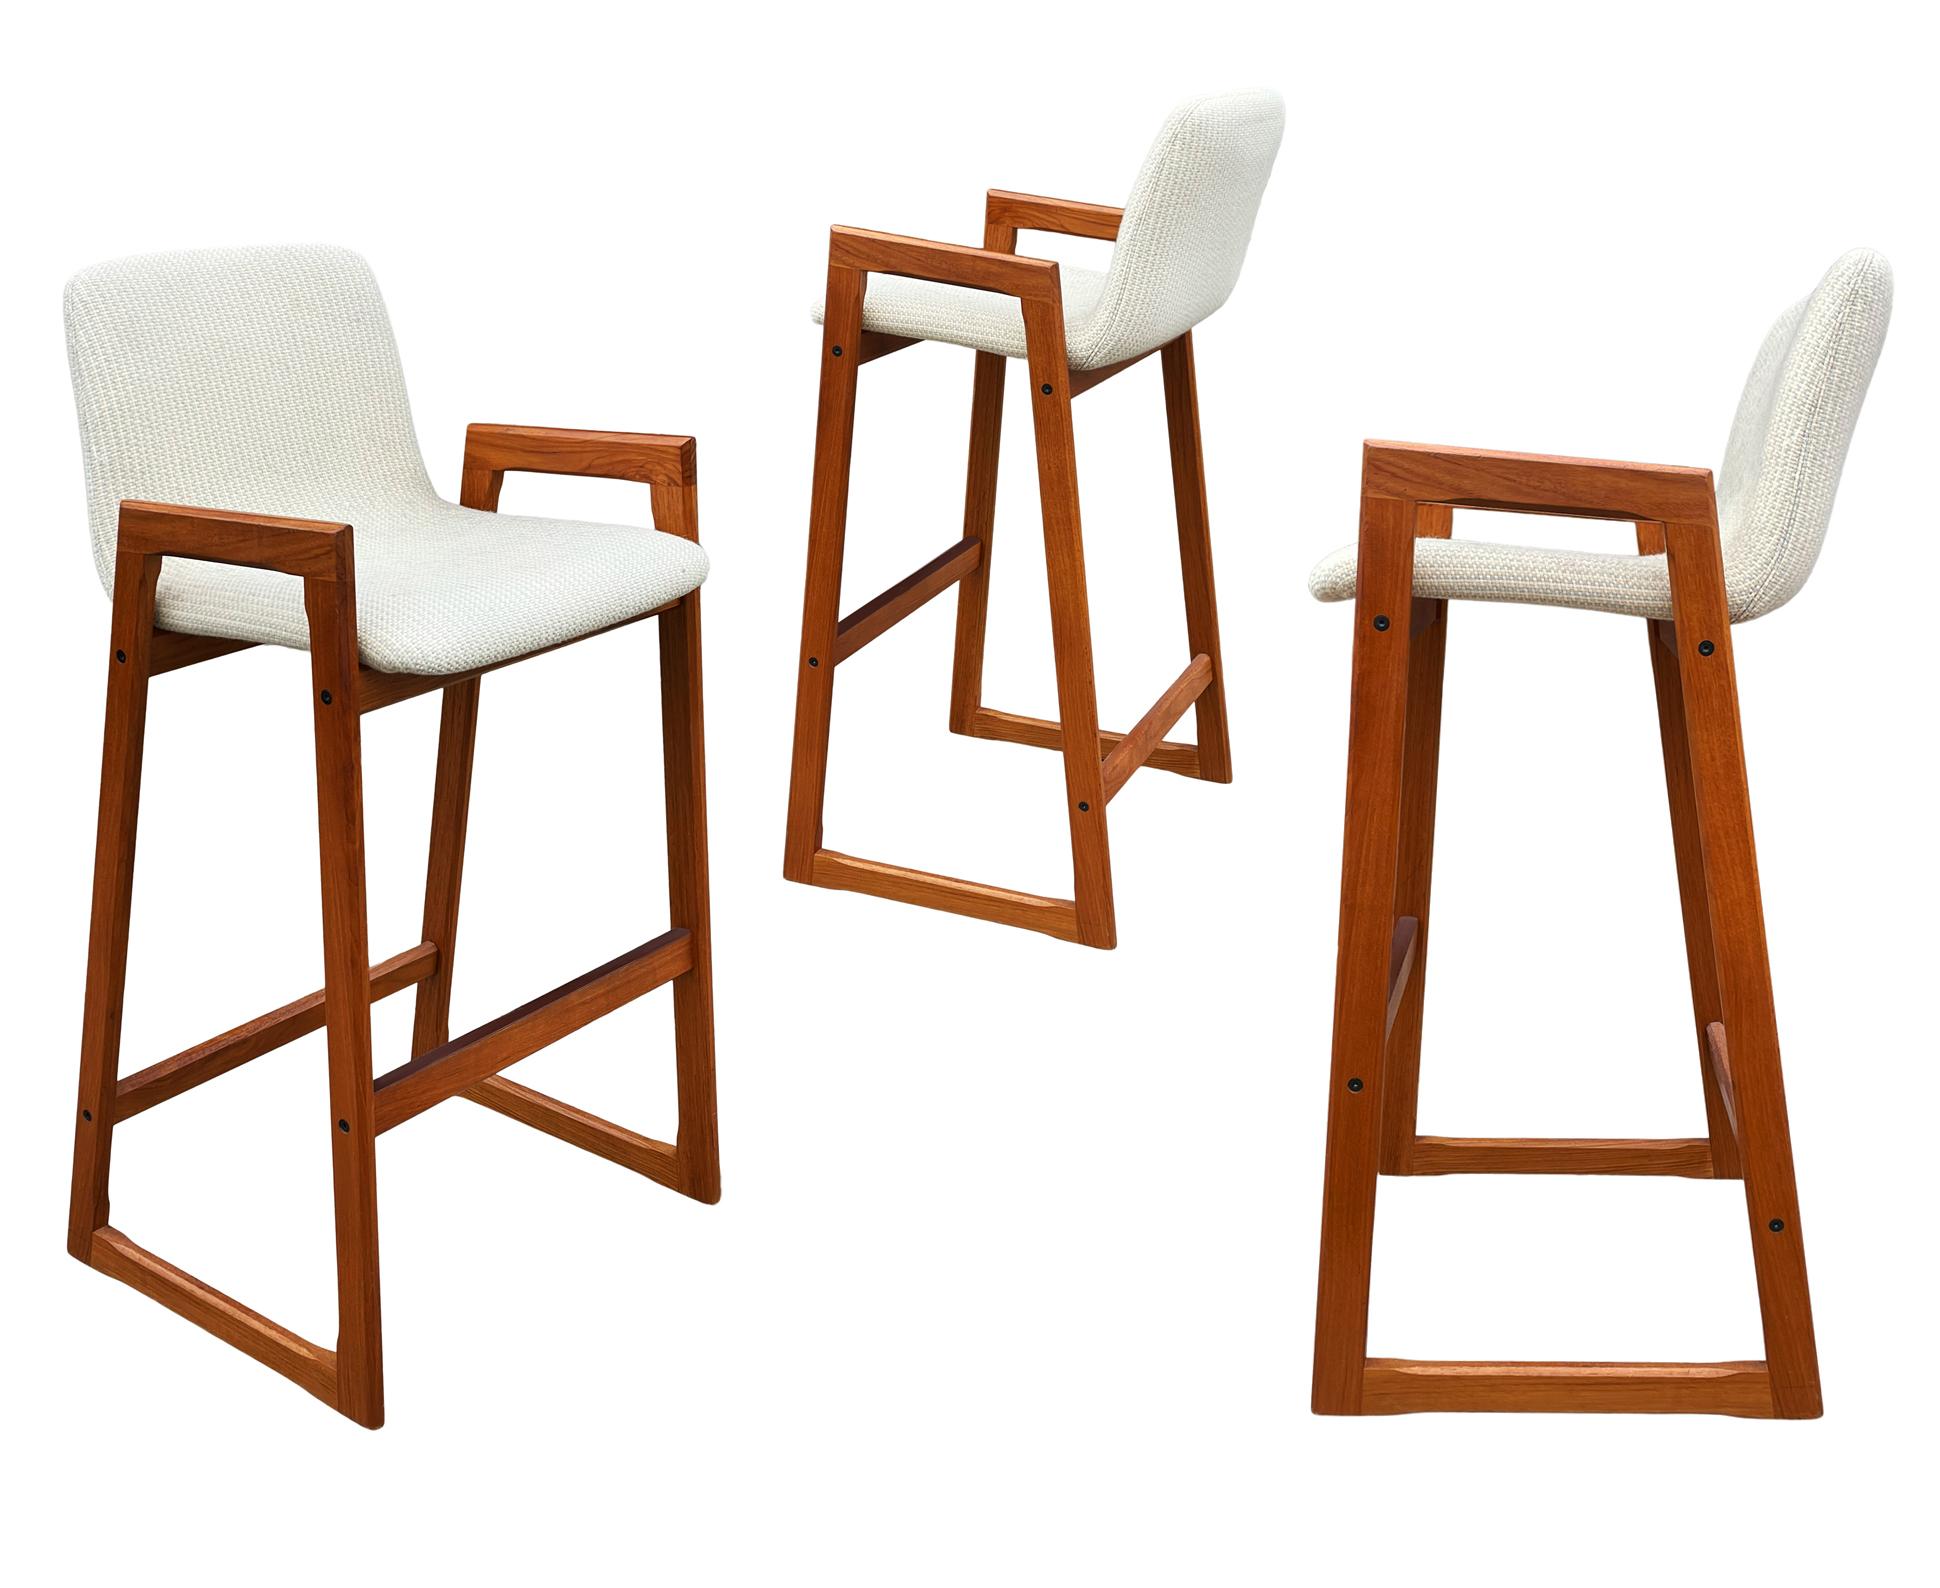 danish modern stool